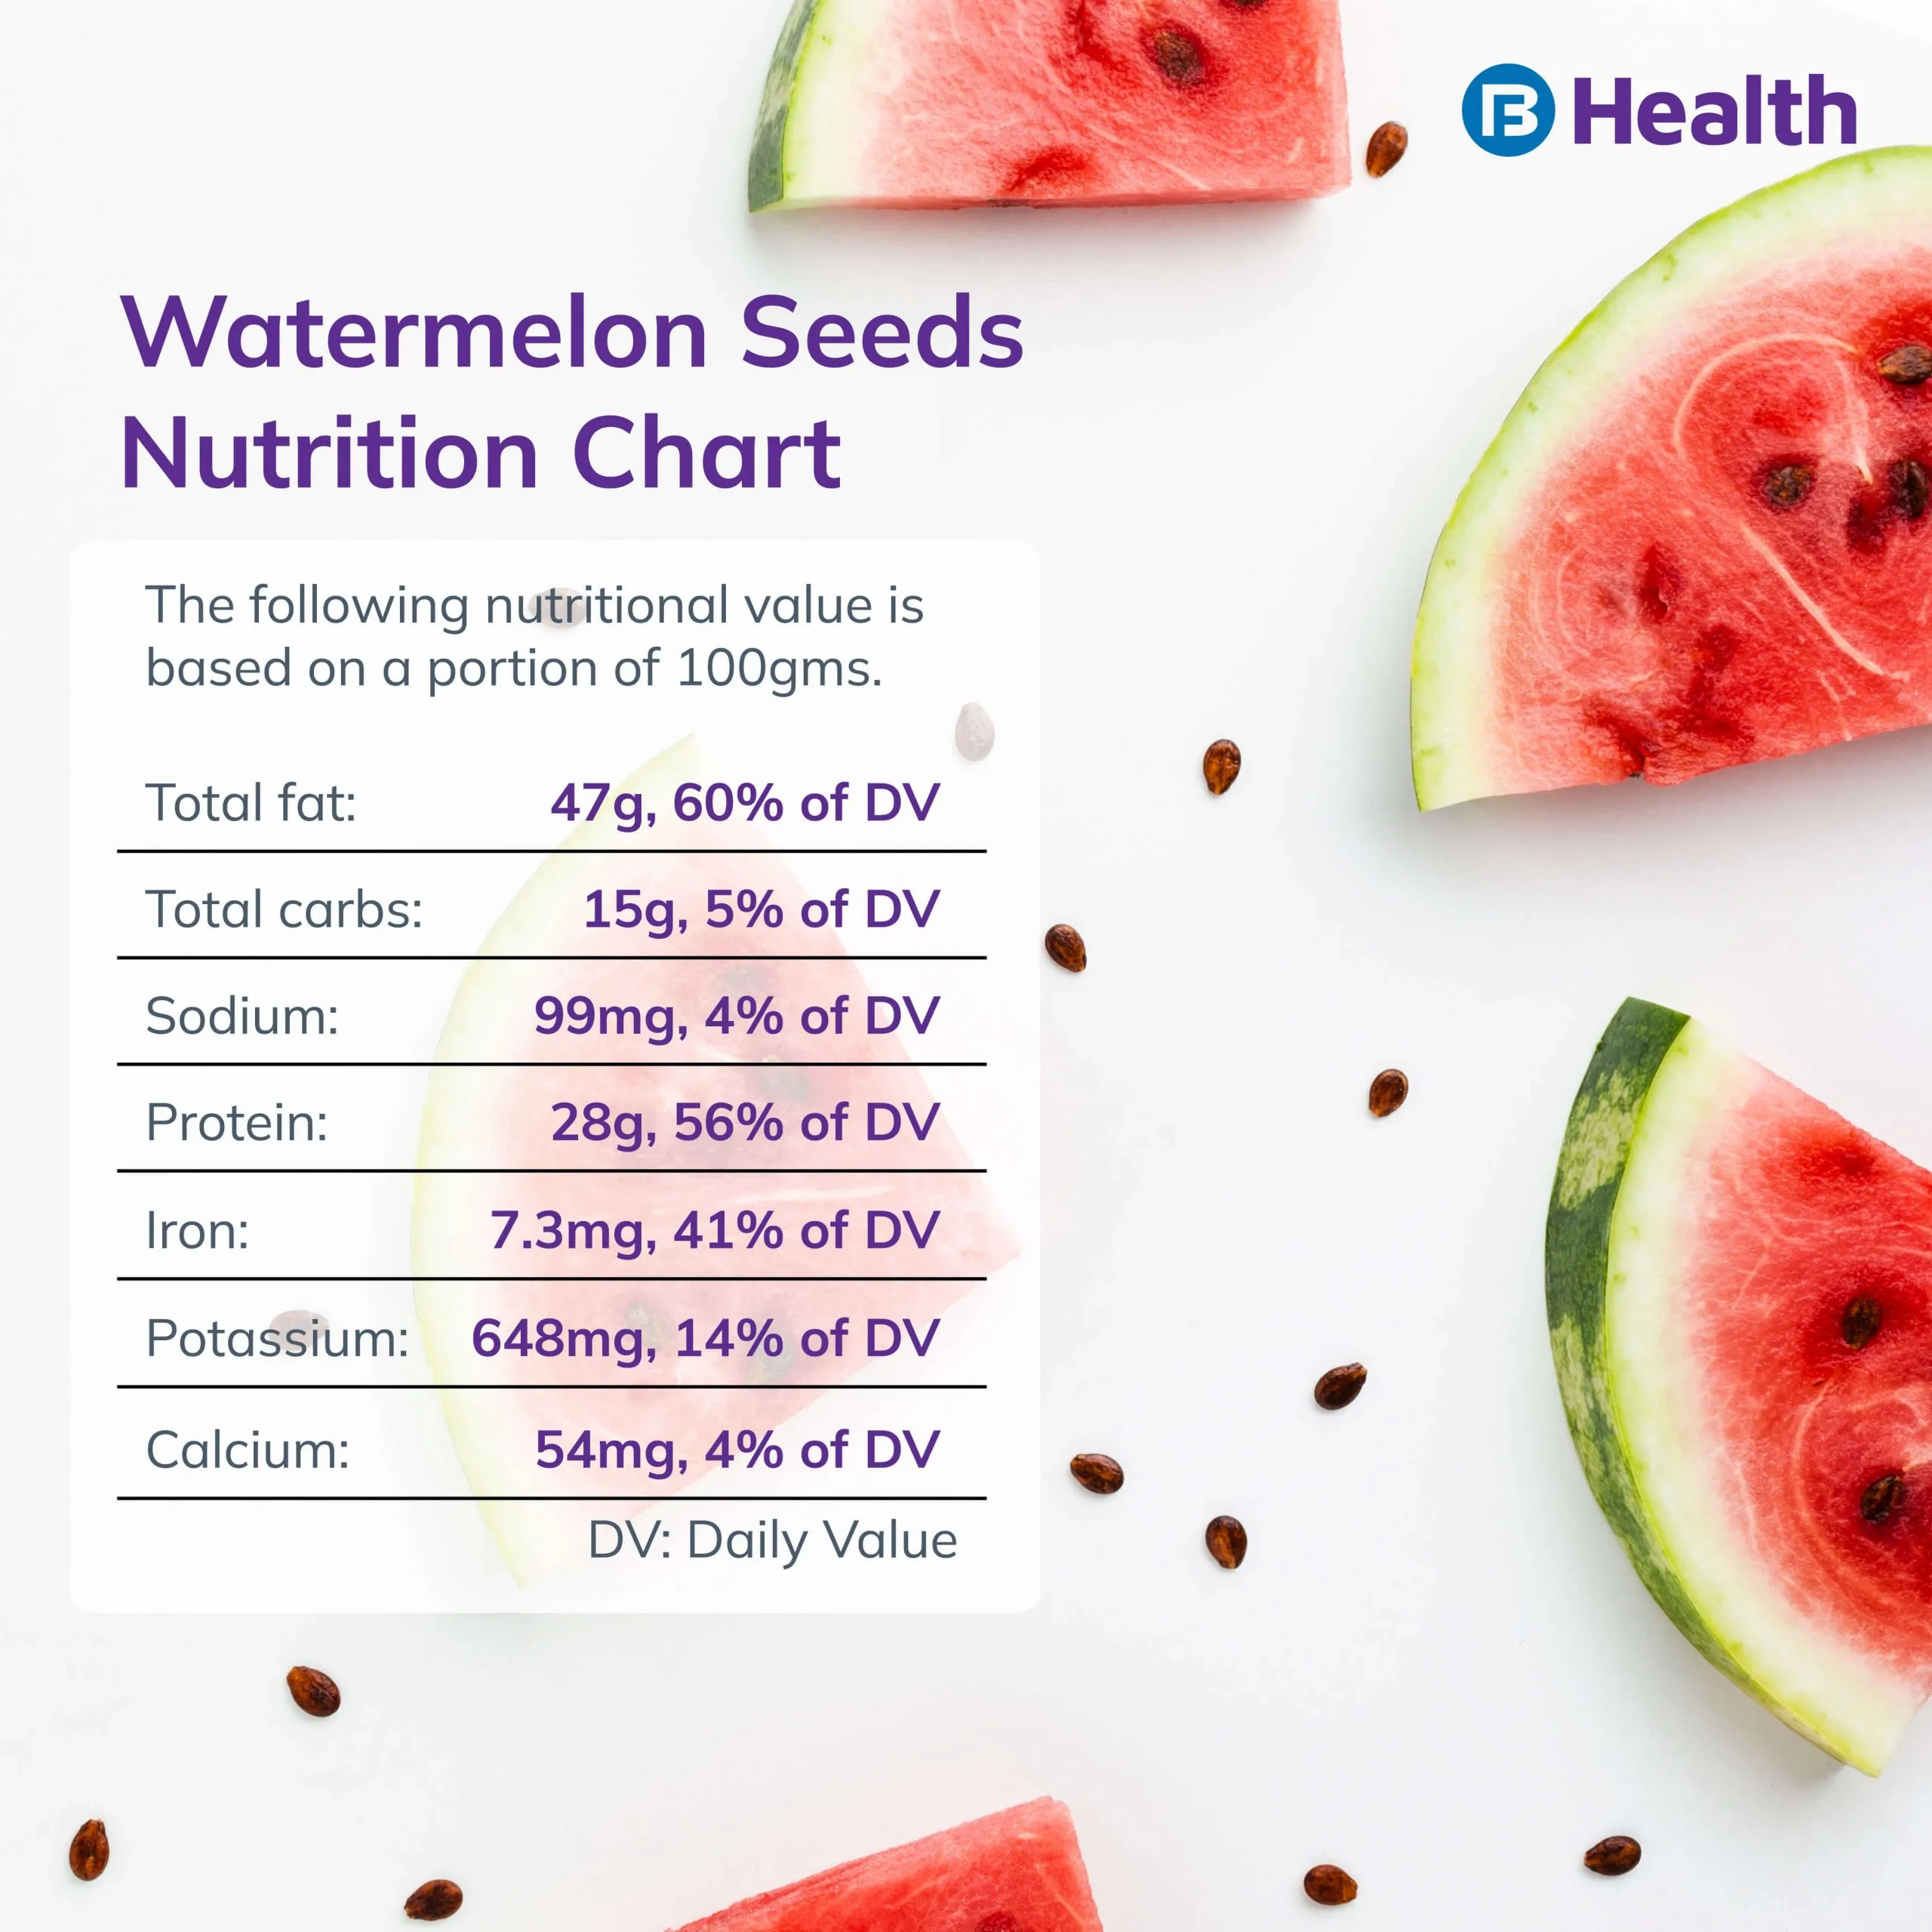 Watermelon Seeds nutrition chart